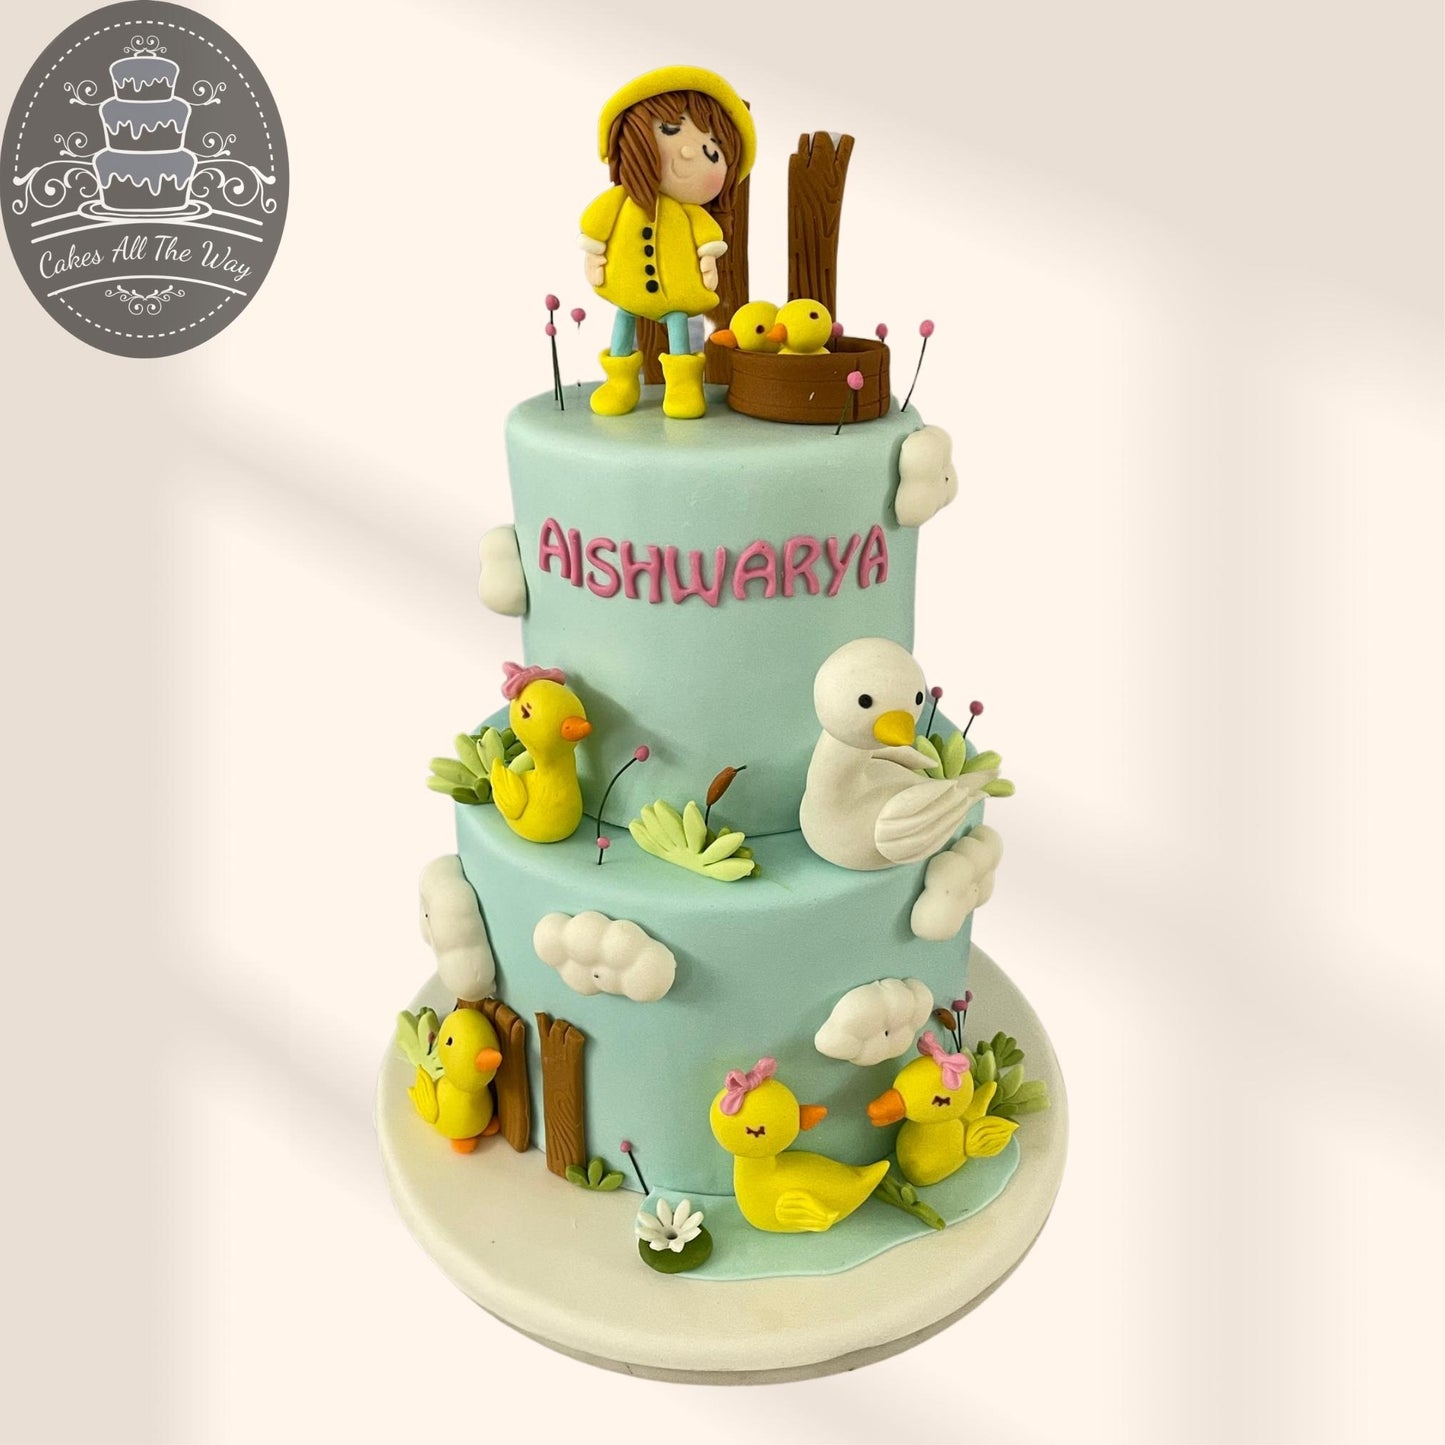 2-Tier Girl and Ducks Theme Cake